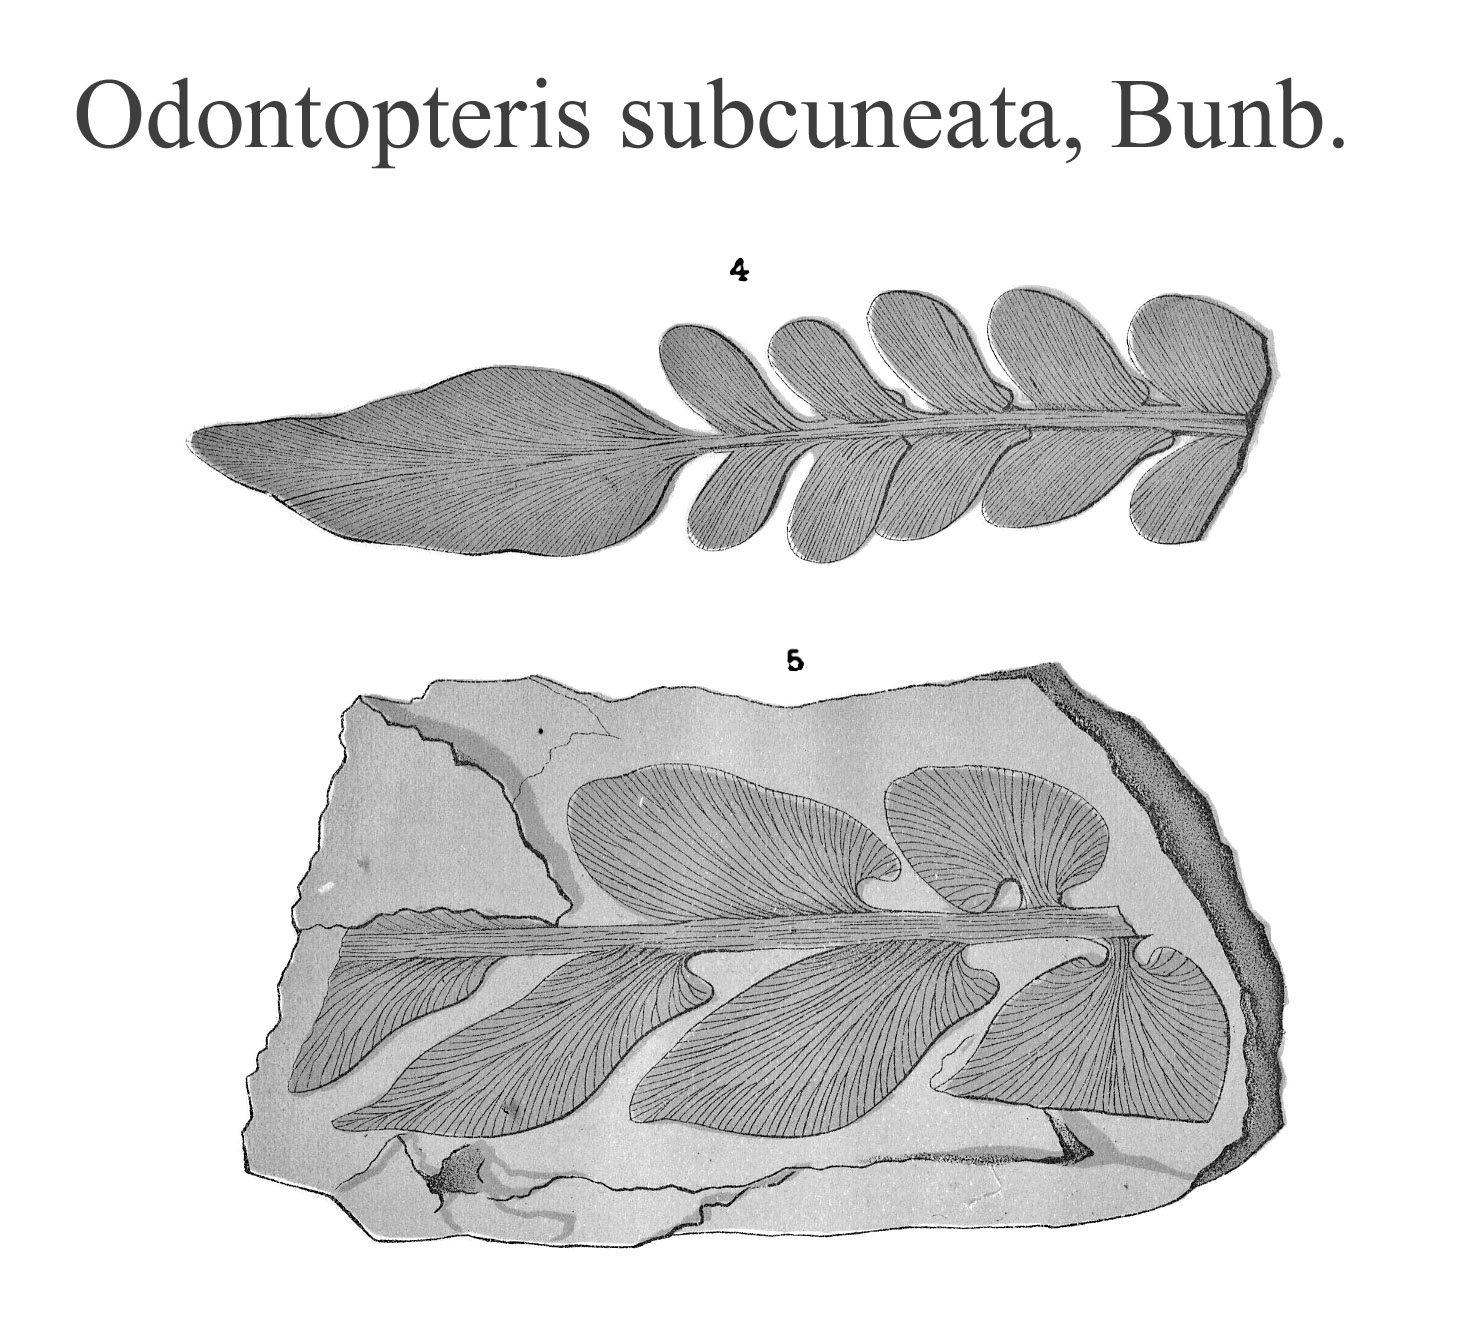 Odontopteris subcuneata, Plate  XXII